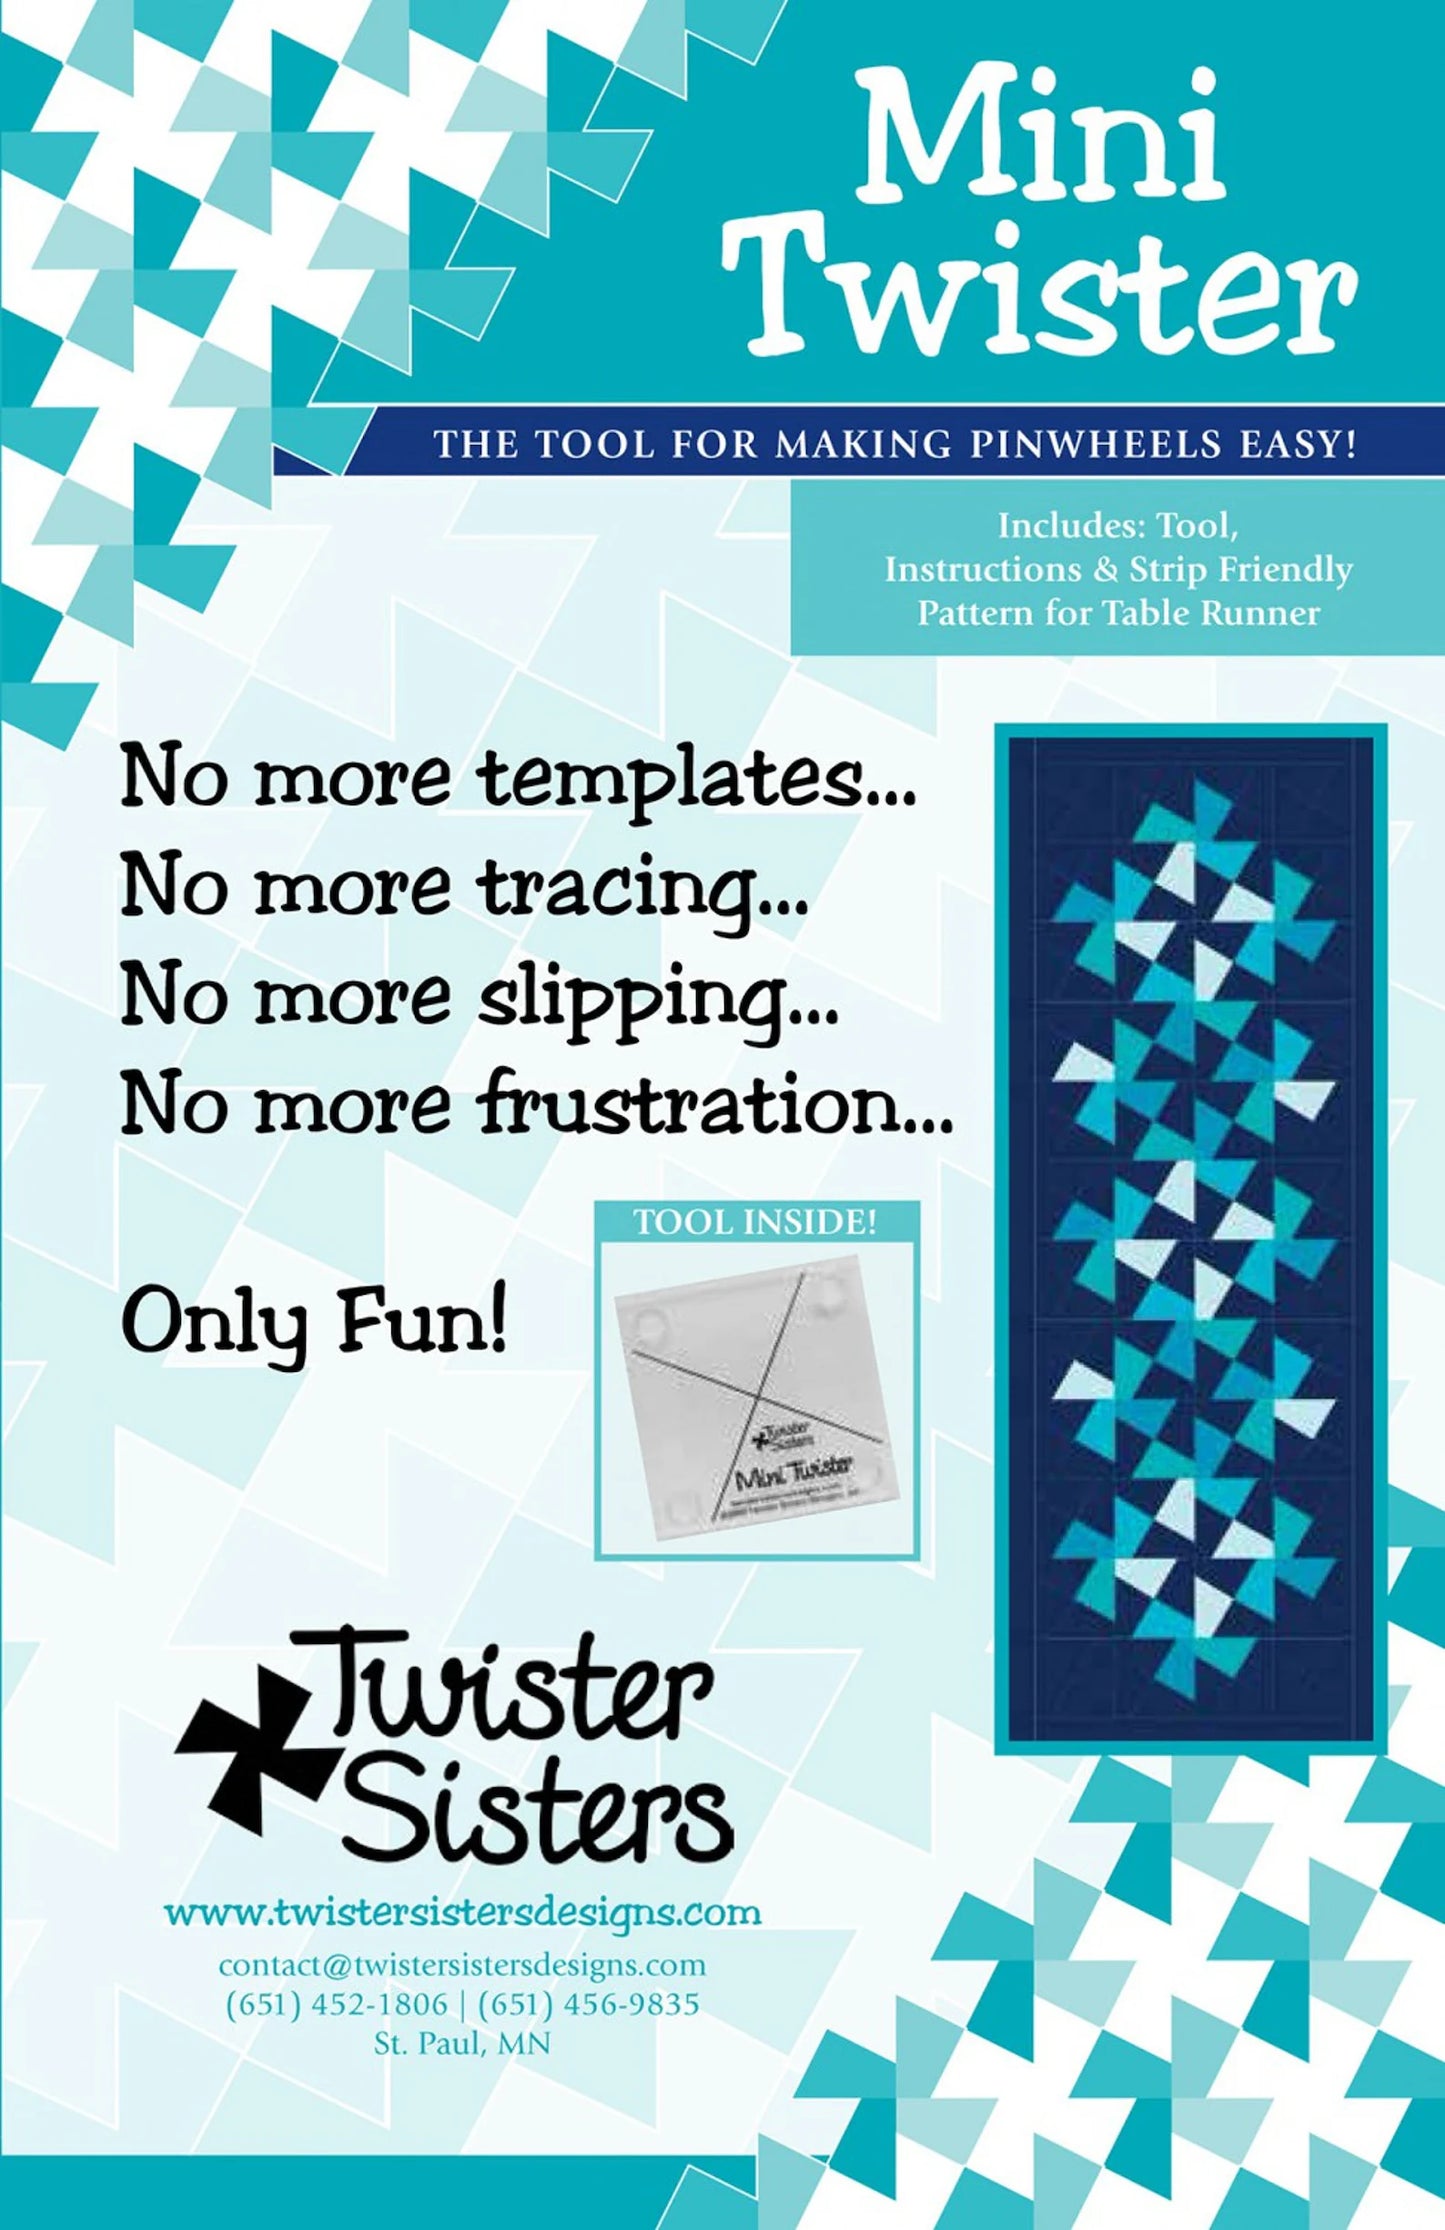 Mini Twister - The Tool for Making Pinwheels Easy!